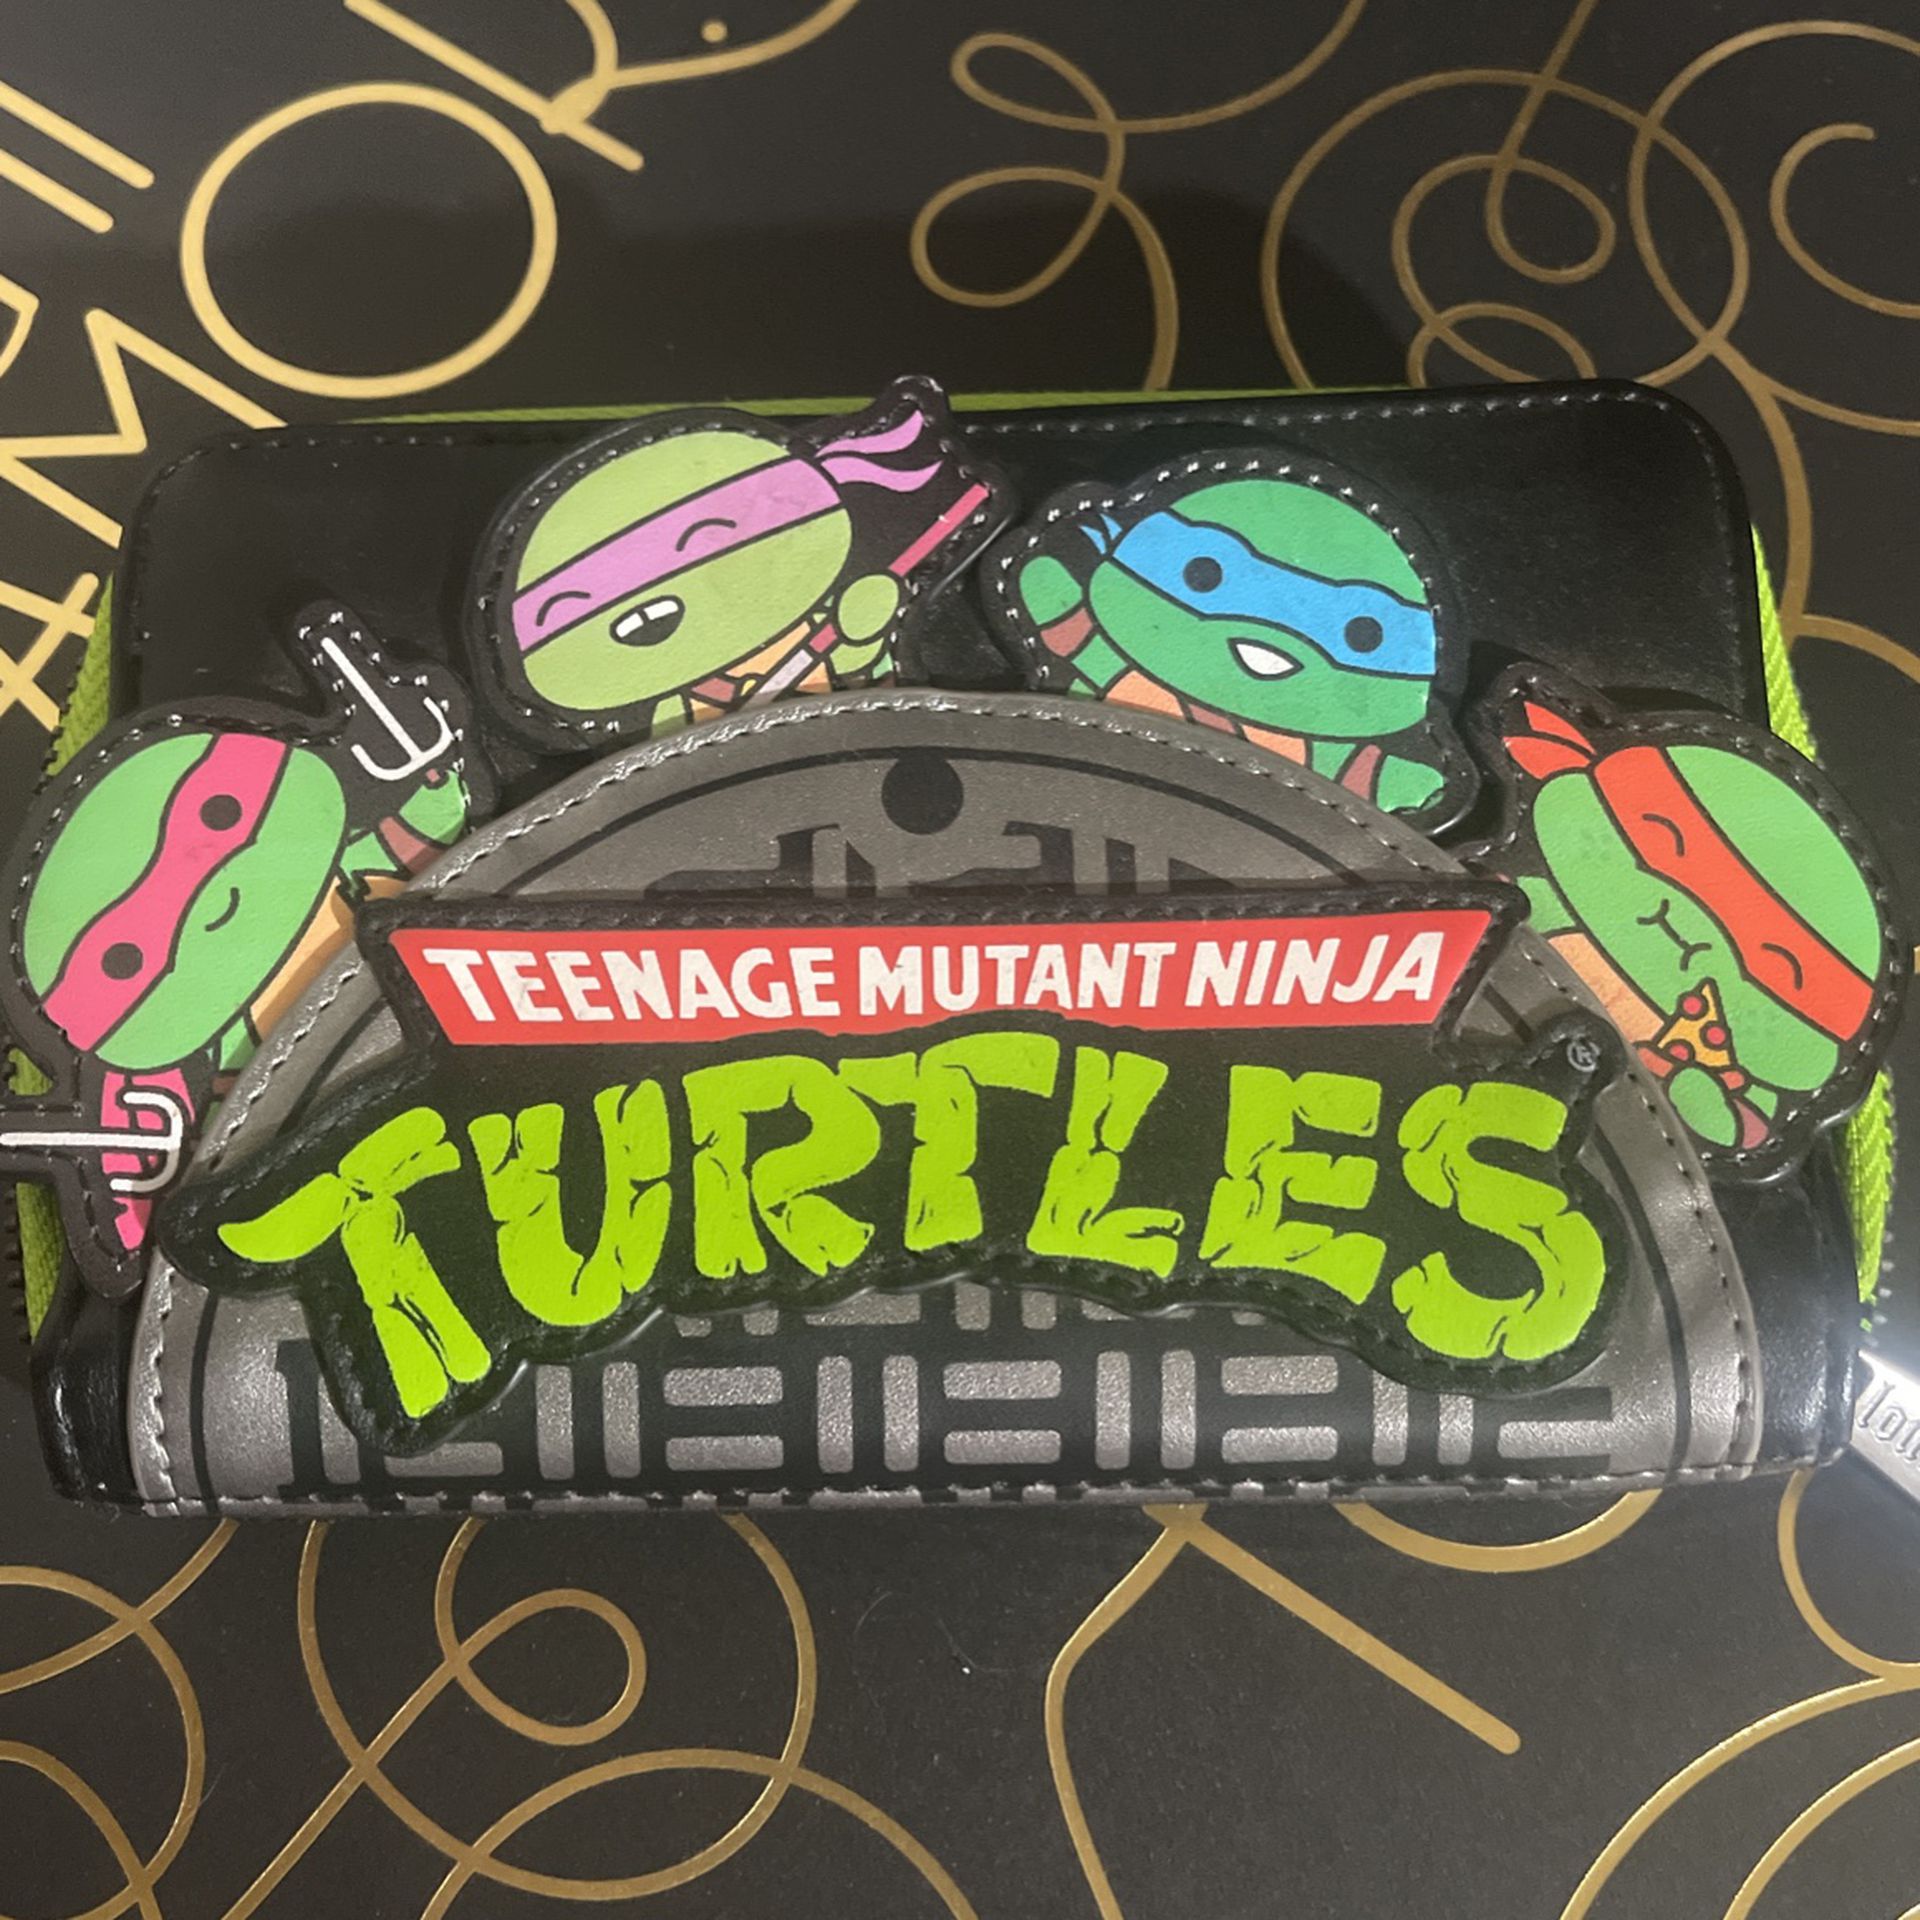  Loungefly Teenage Mutant Ninja Turtles Wallet